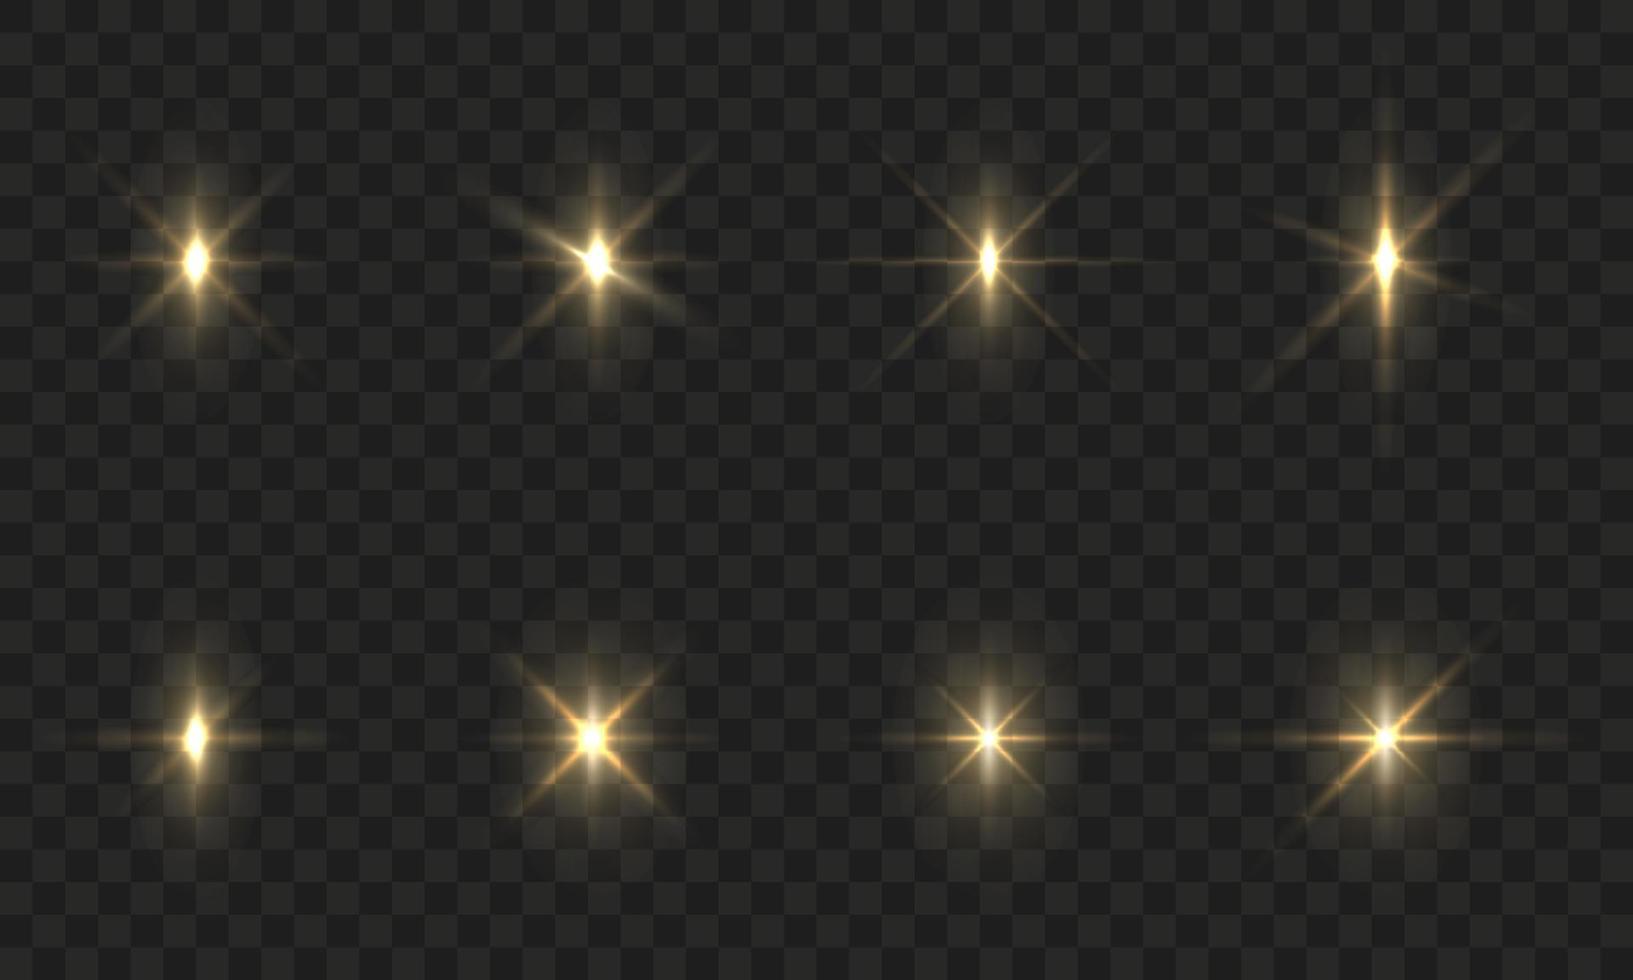 Set of Shine Stars on Transparent Background. Flare Sparkle Stars. Gleam Glitter Festive Set. Golden bokeh Lights Glitter and Sequins. Shiny Burst Illuminated Flare. Isolated Vector Illustration.